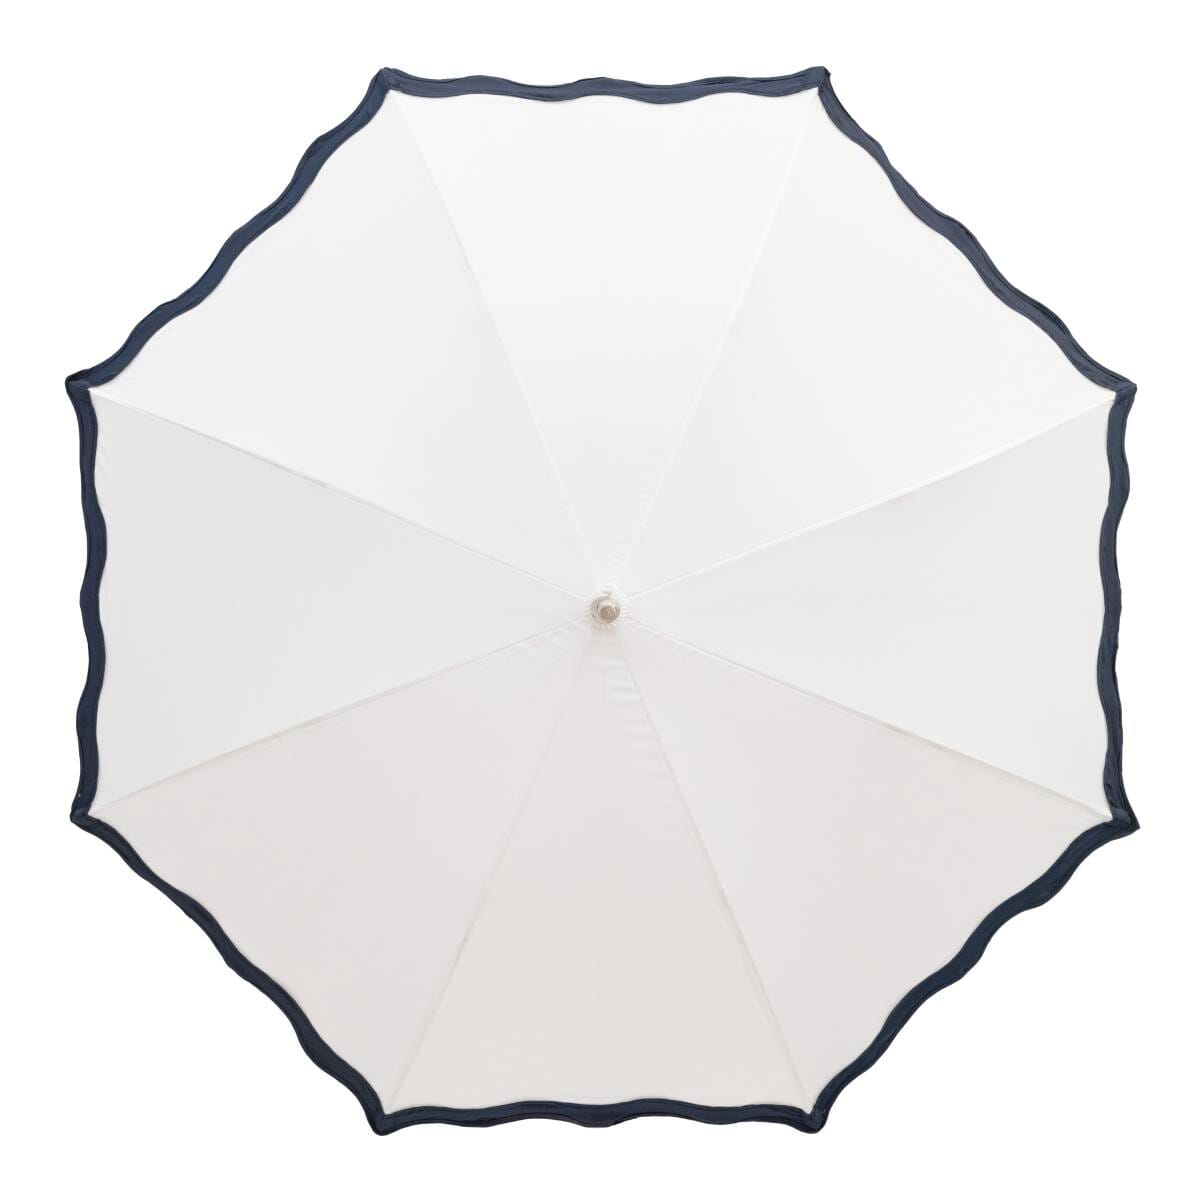 studio image of riviera white rain umbrella